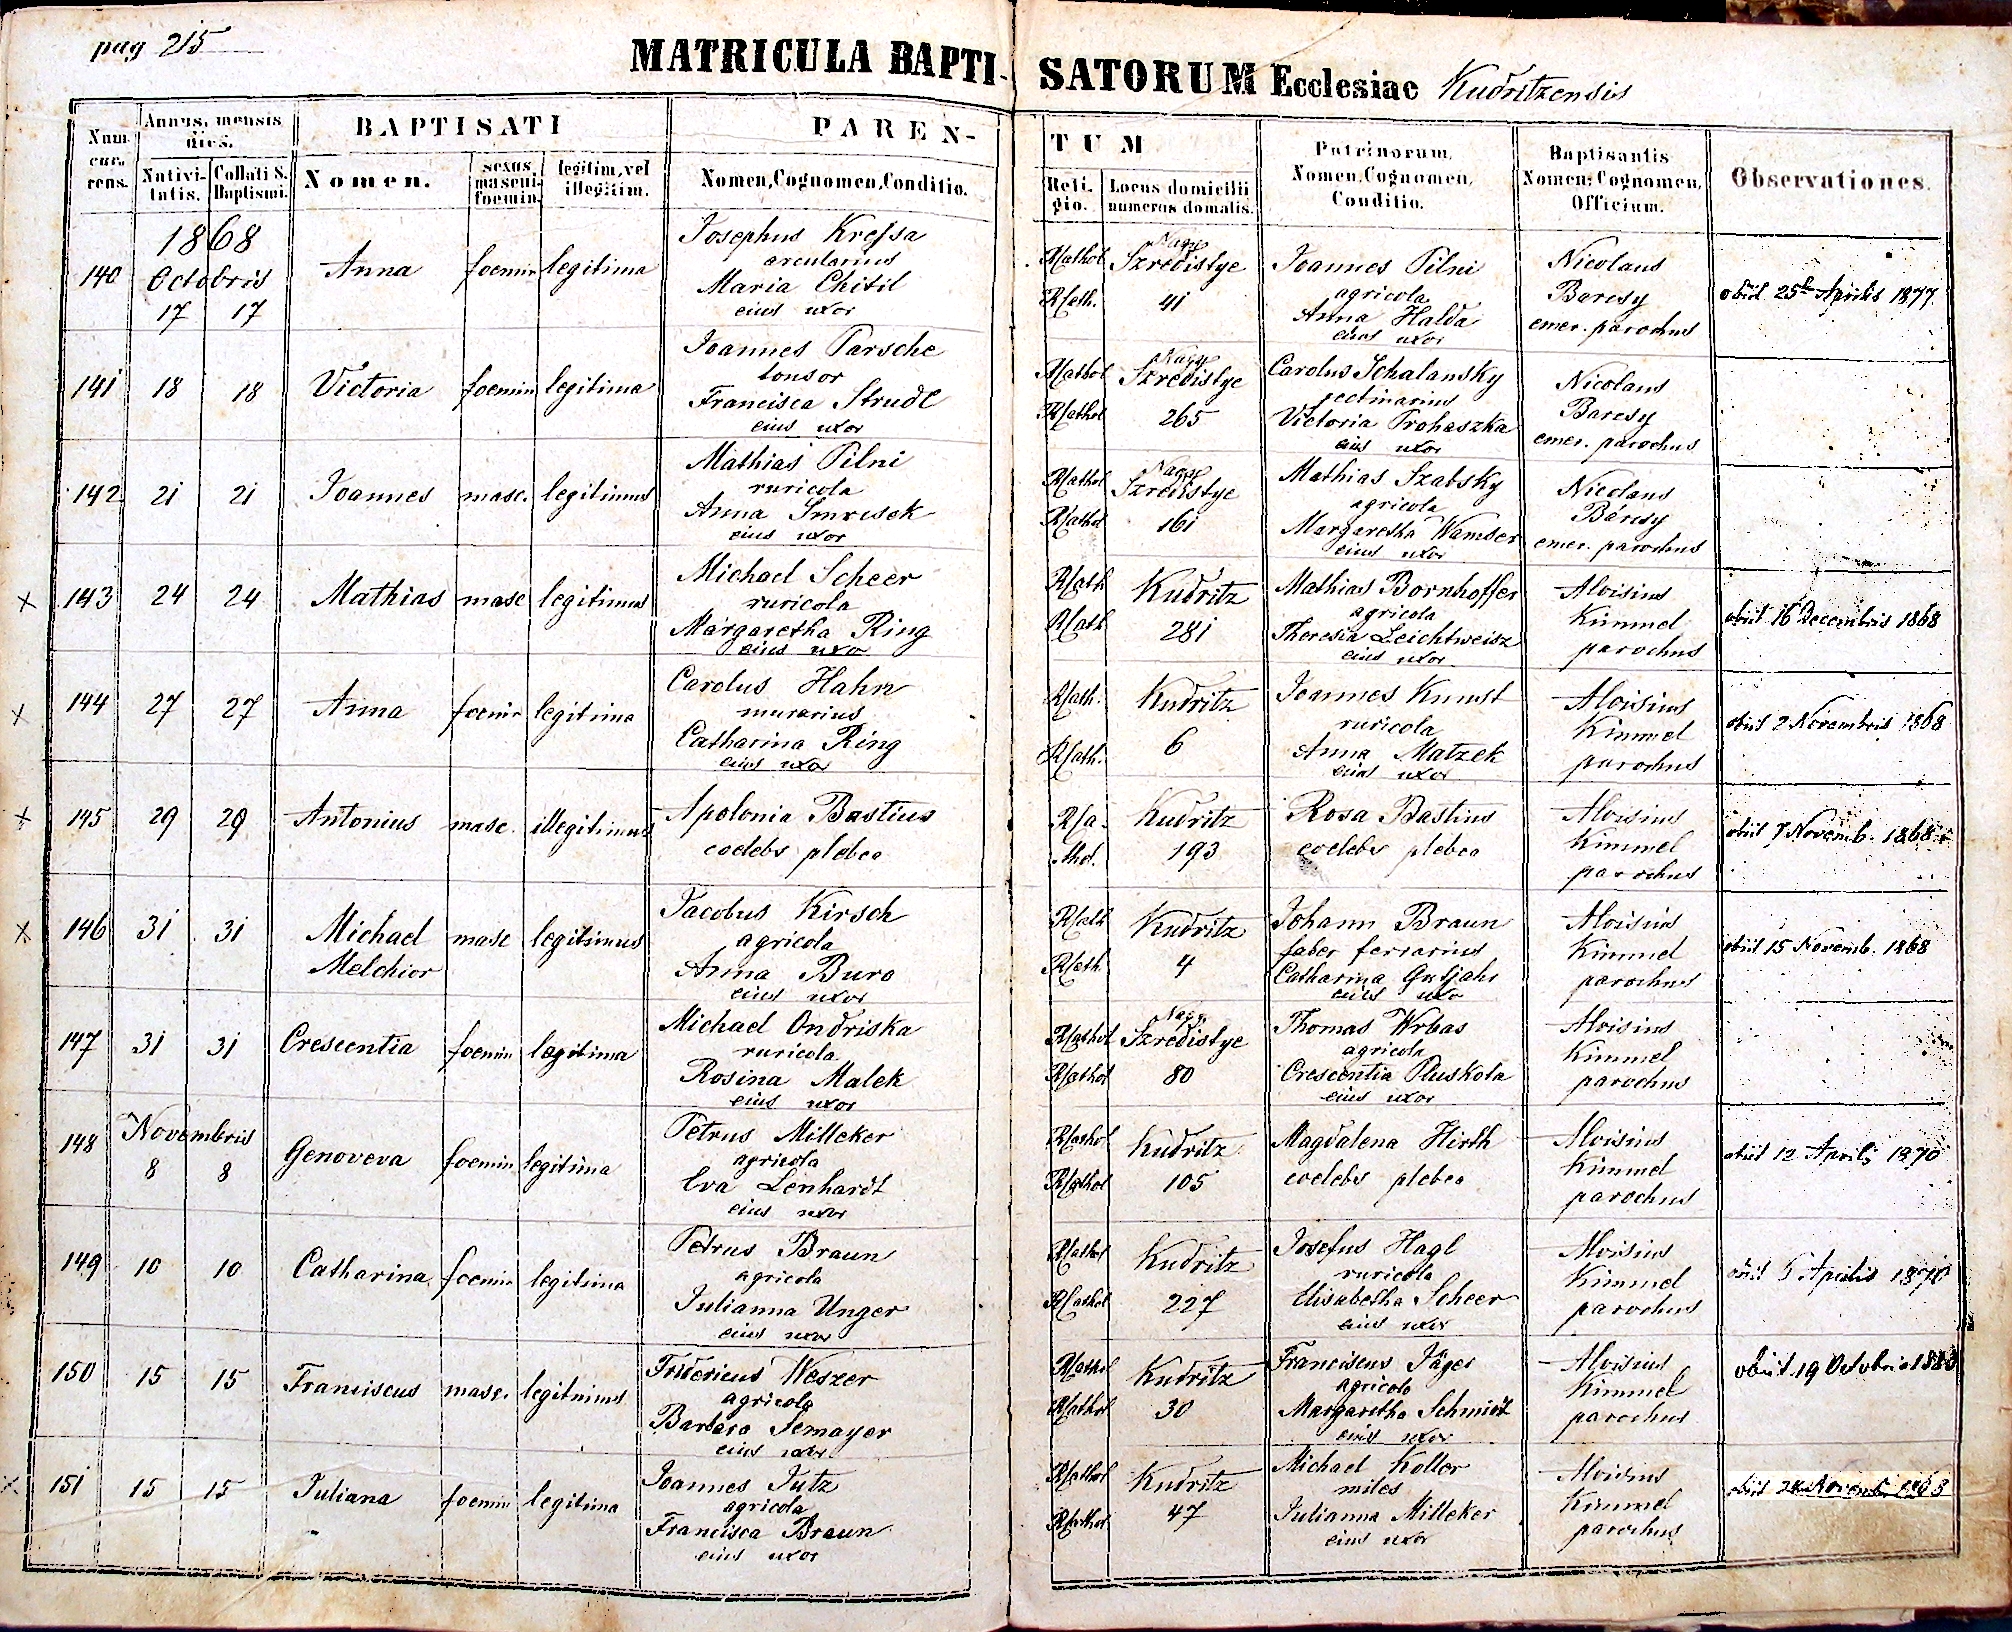 images/church_records/BIRTHS/1852-1870B/215